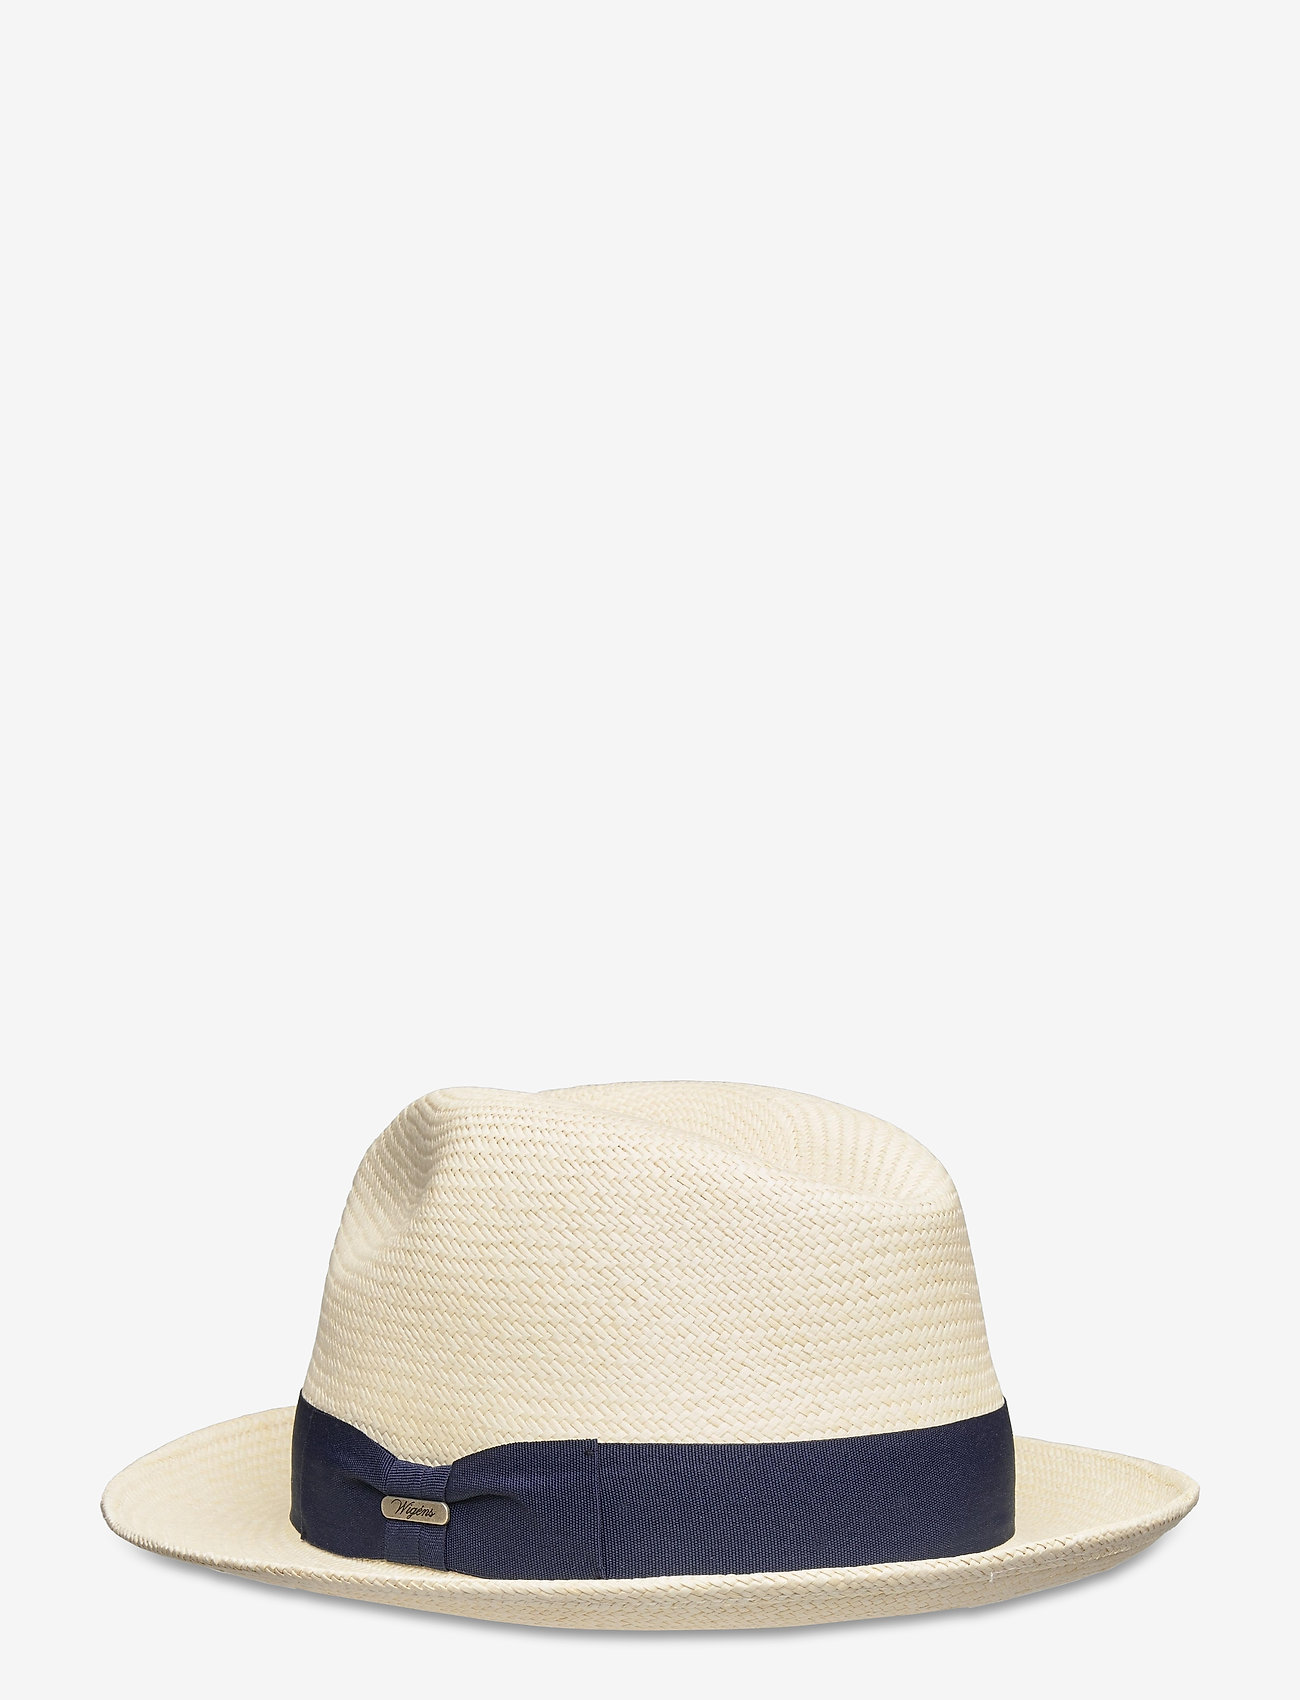 Wigéns - Panama Trilby Hat - cepures - navy - 1